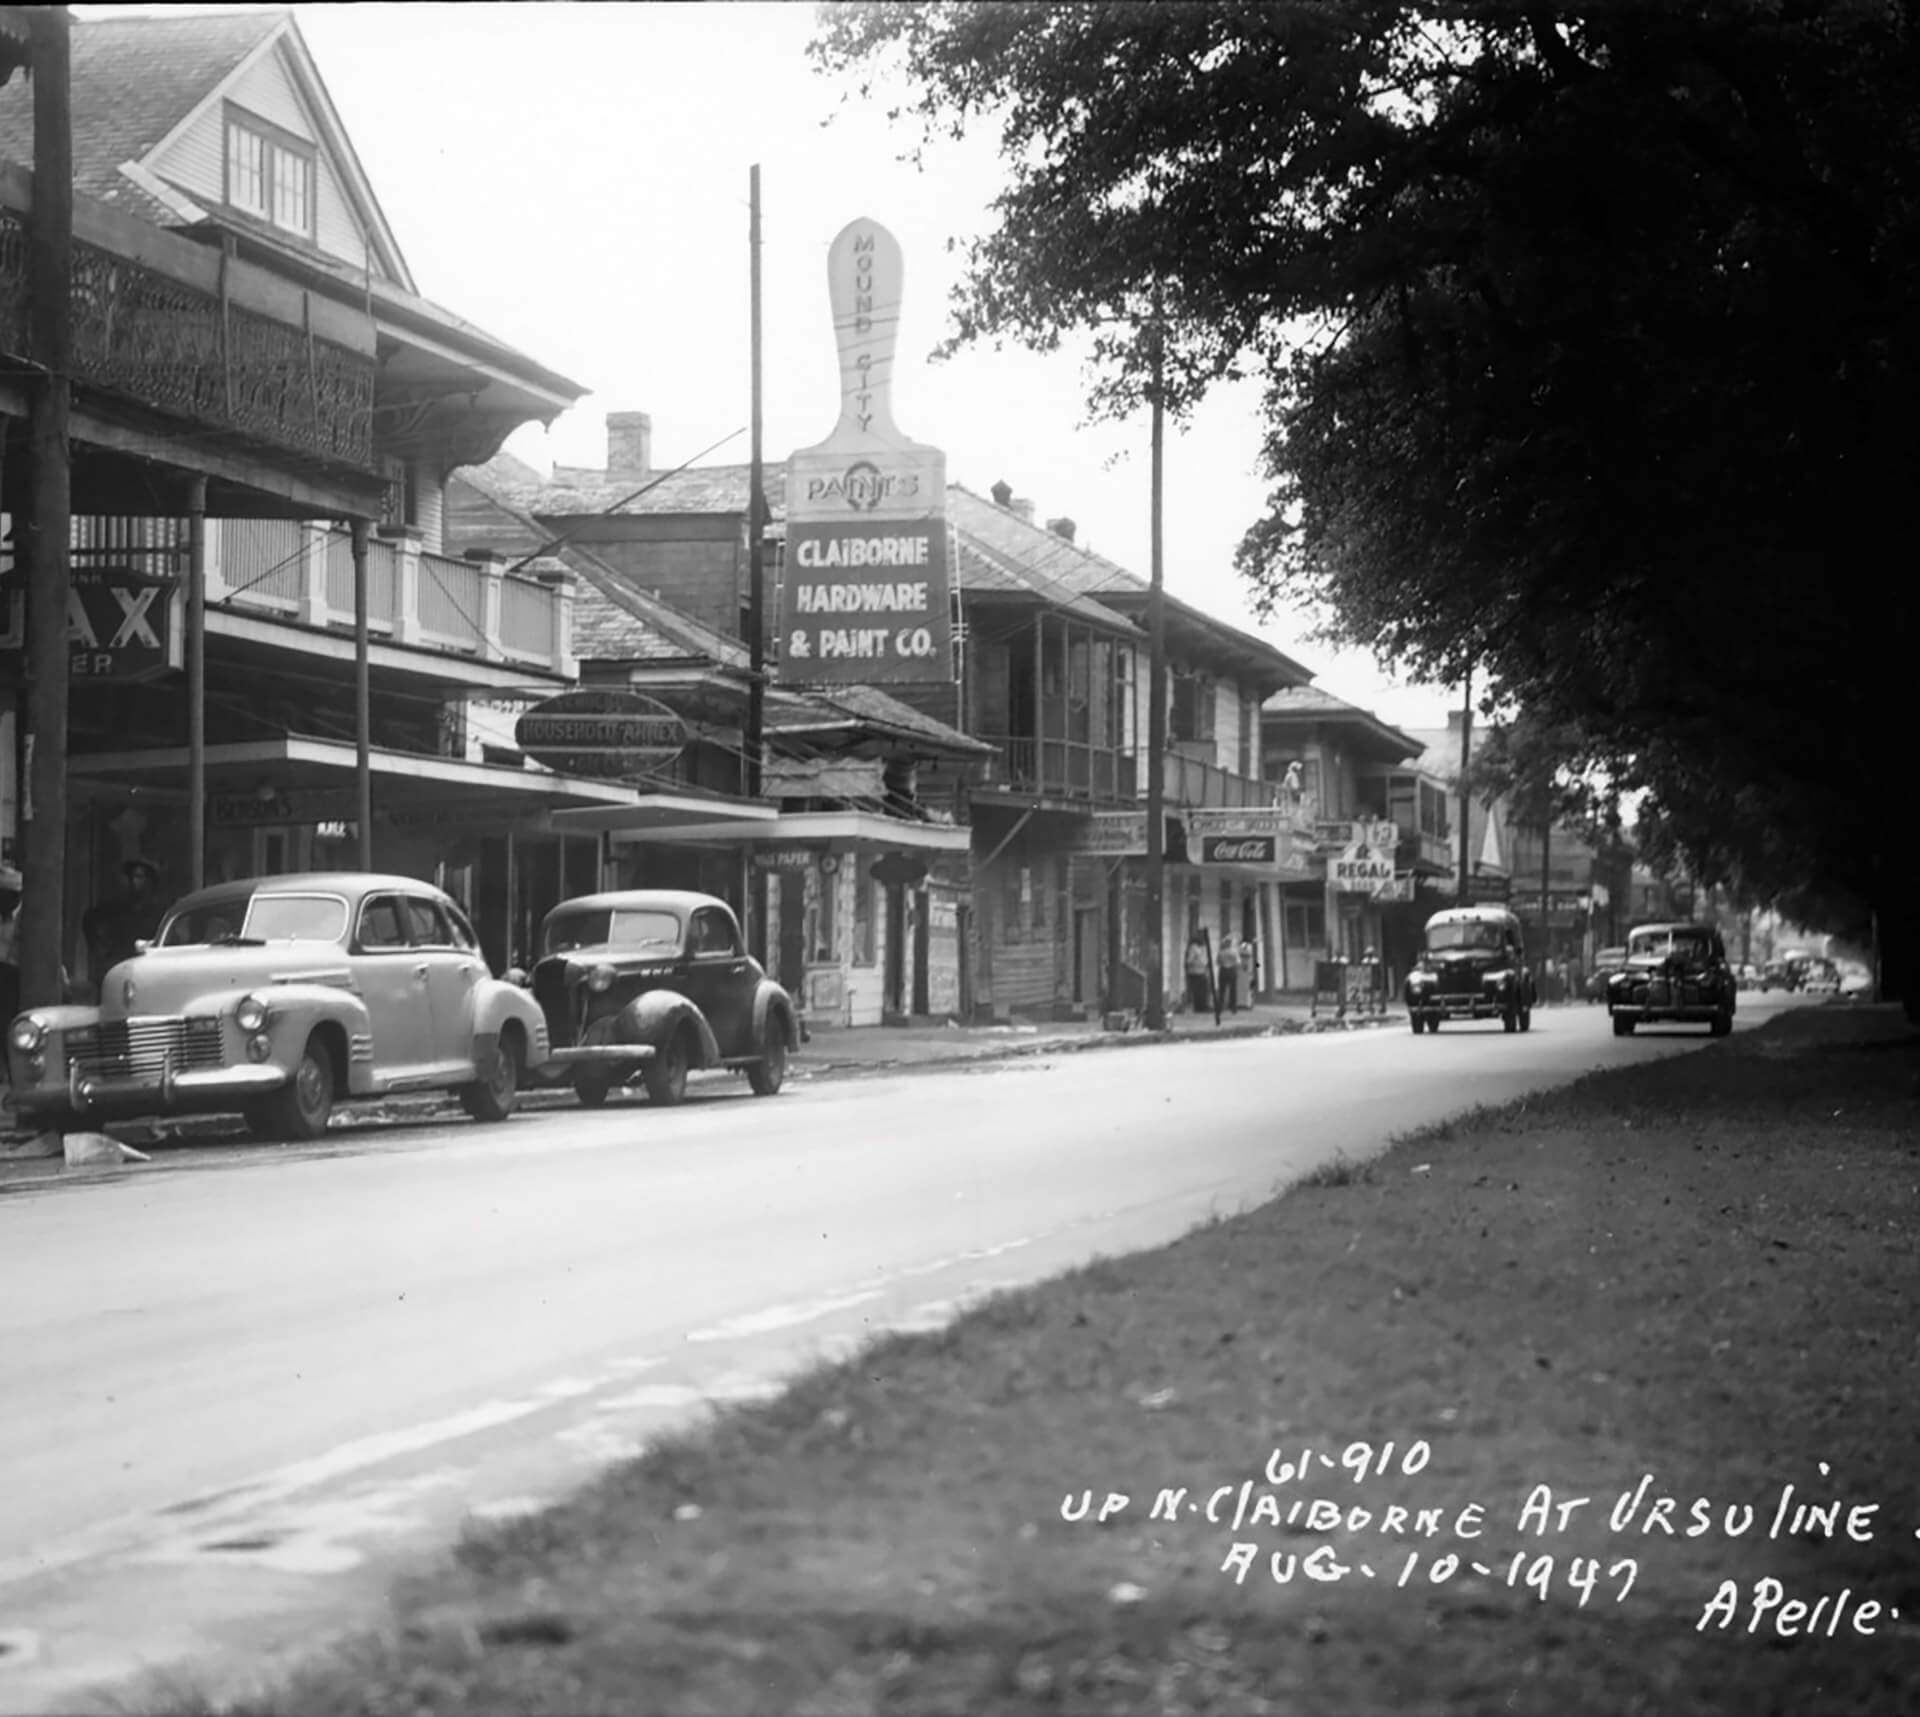 A historical photograph of Claiborne Avenue near Claiborne Hardware and Paint Co